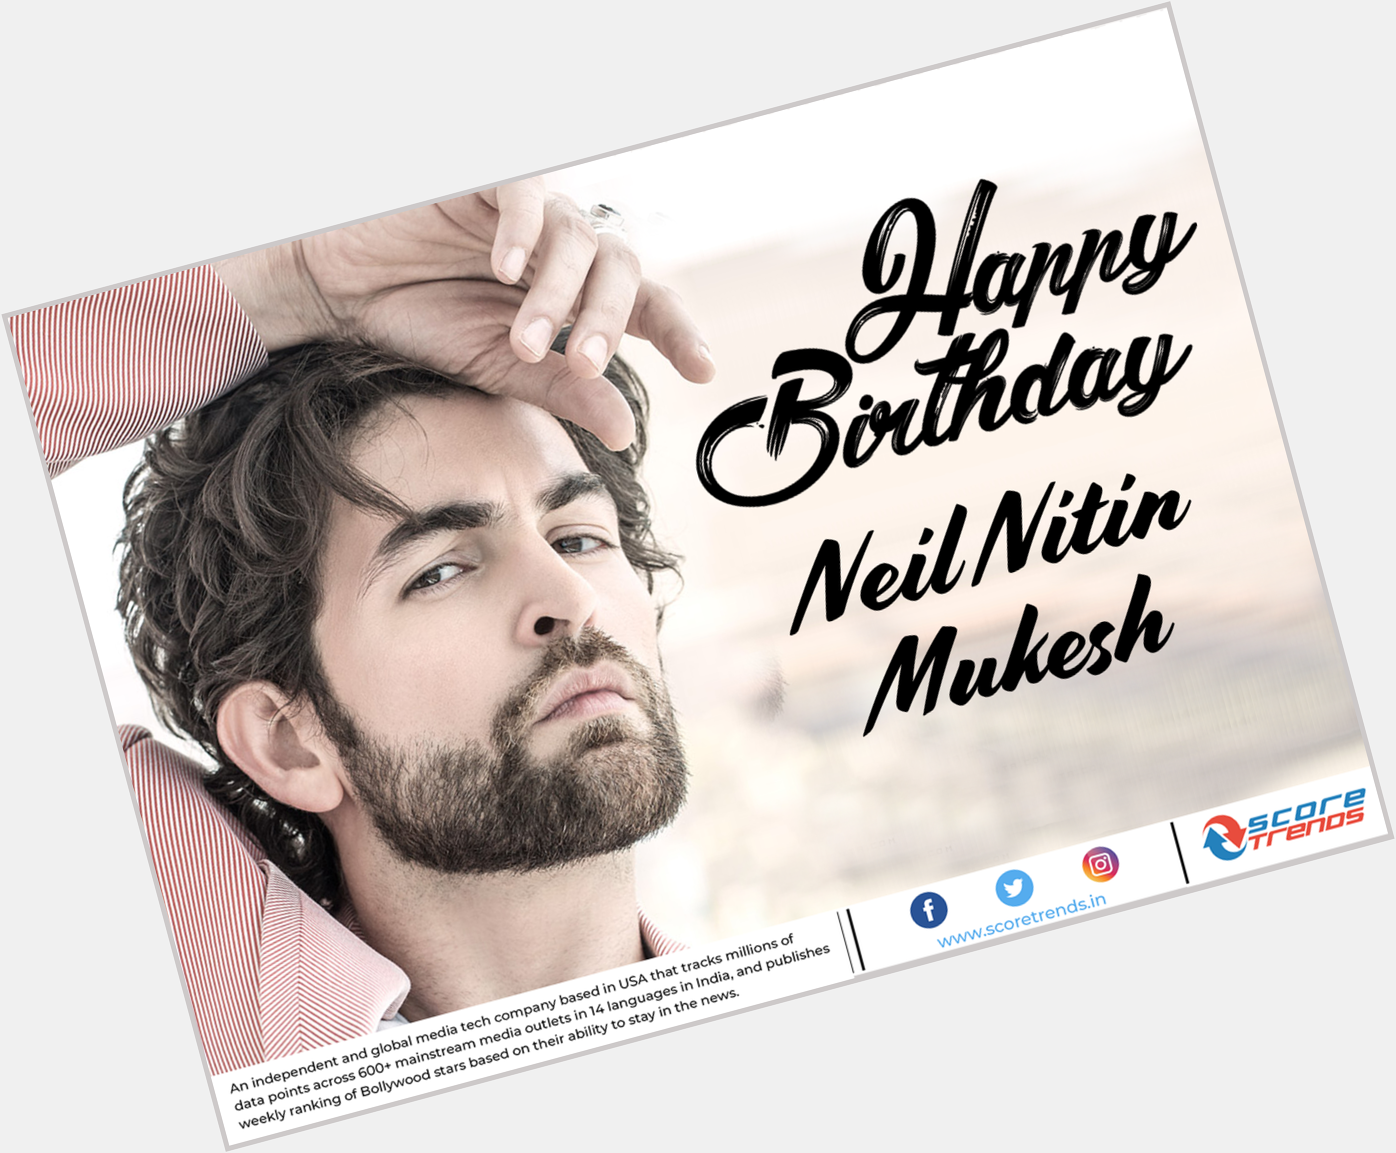 Score Trends wishes Neil Nitin mukesh a Happy Birthday!! 